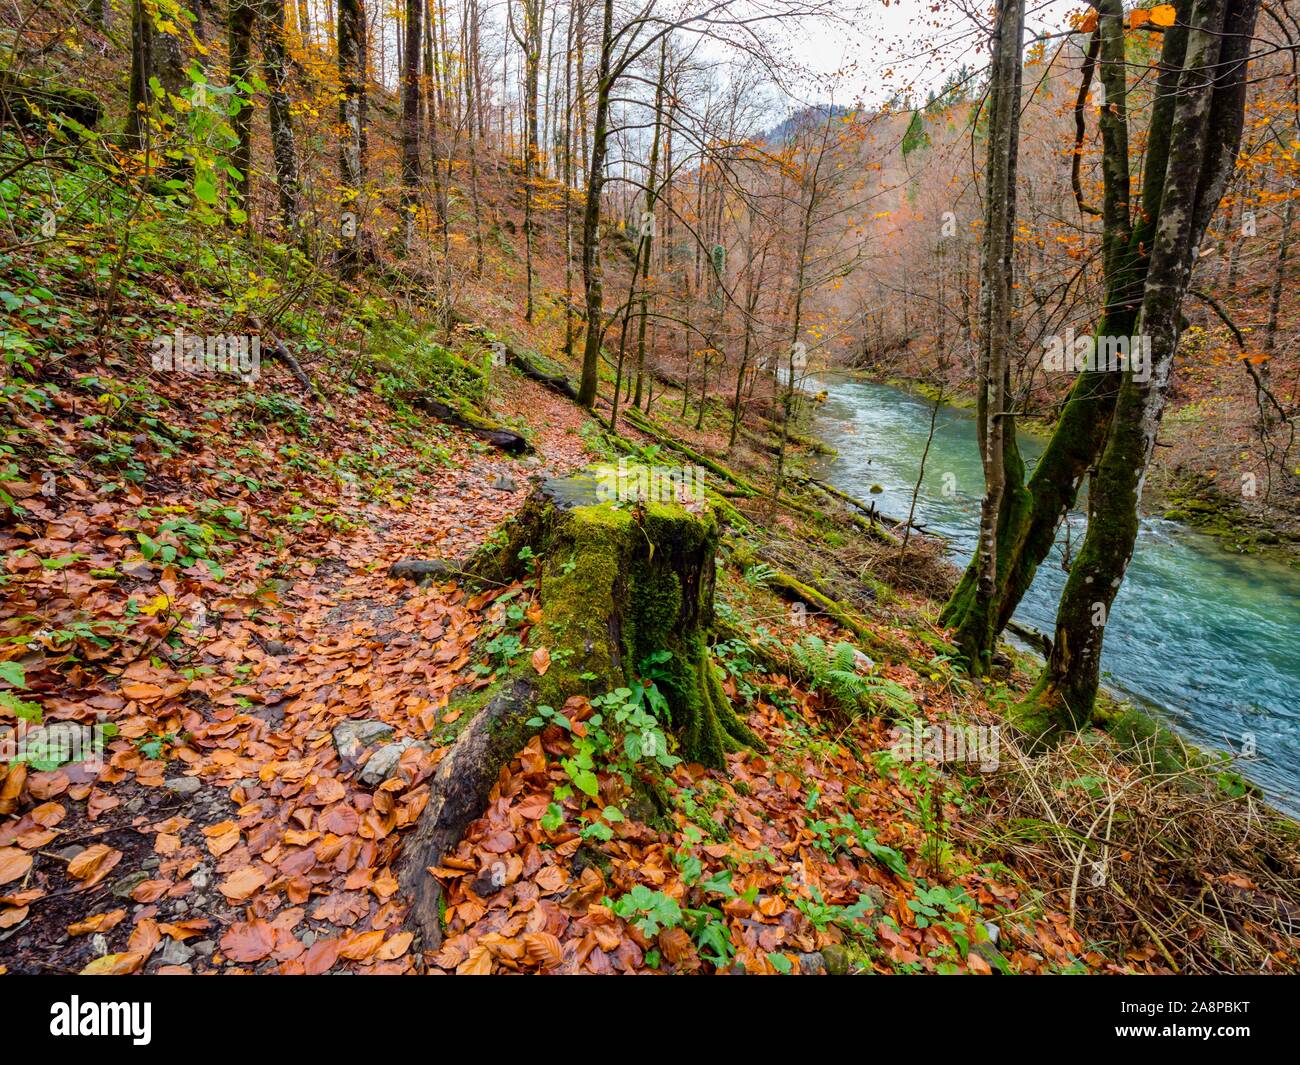 Tree stump Autumn Fall season in Kamacnik near Vrbovsko in Croatia Stock Photo